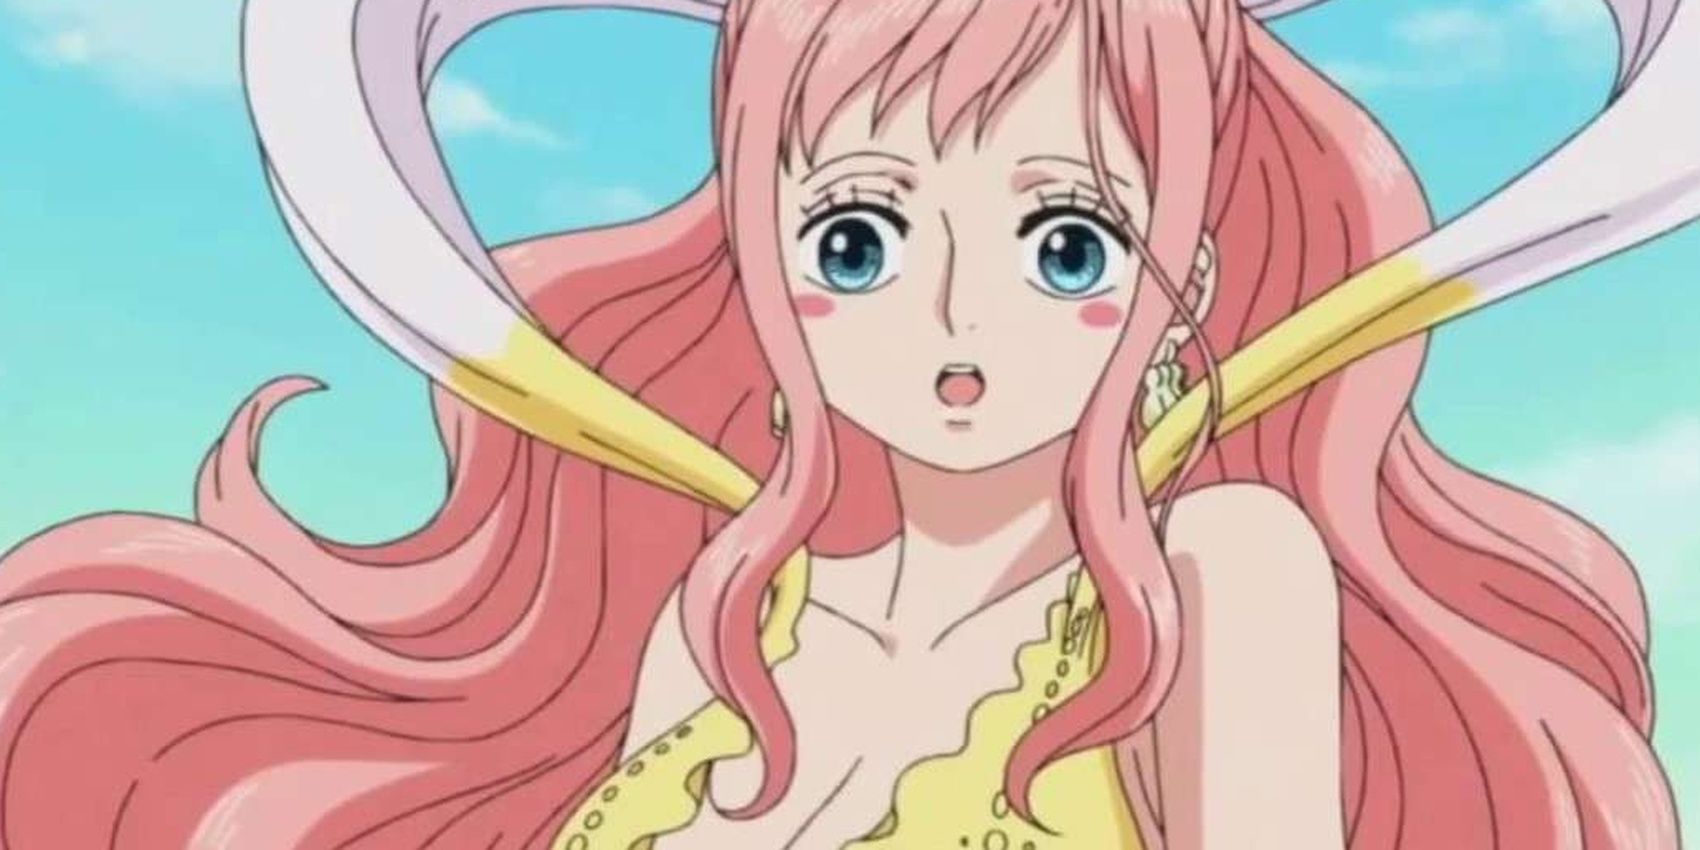 Princess Shirahoshi in One Piece.